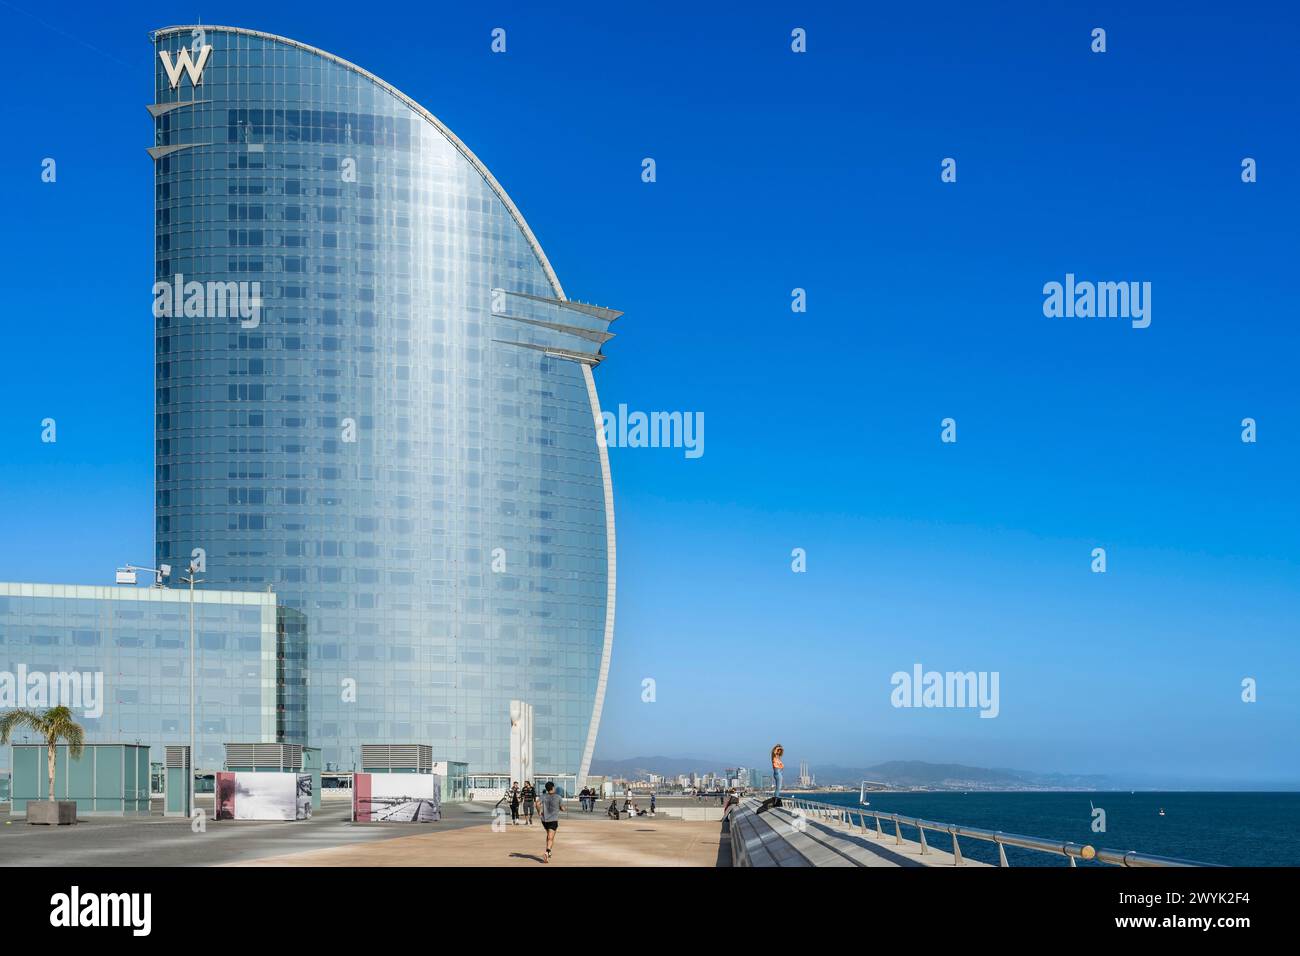 Spanien, Katalonien, Barcelona, La Barceloneta, Port Vell, das Hotel W Barcelona vom Architekten Ricardo Bofill am Meer Stockfoto